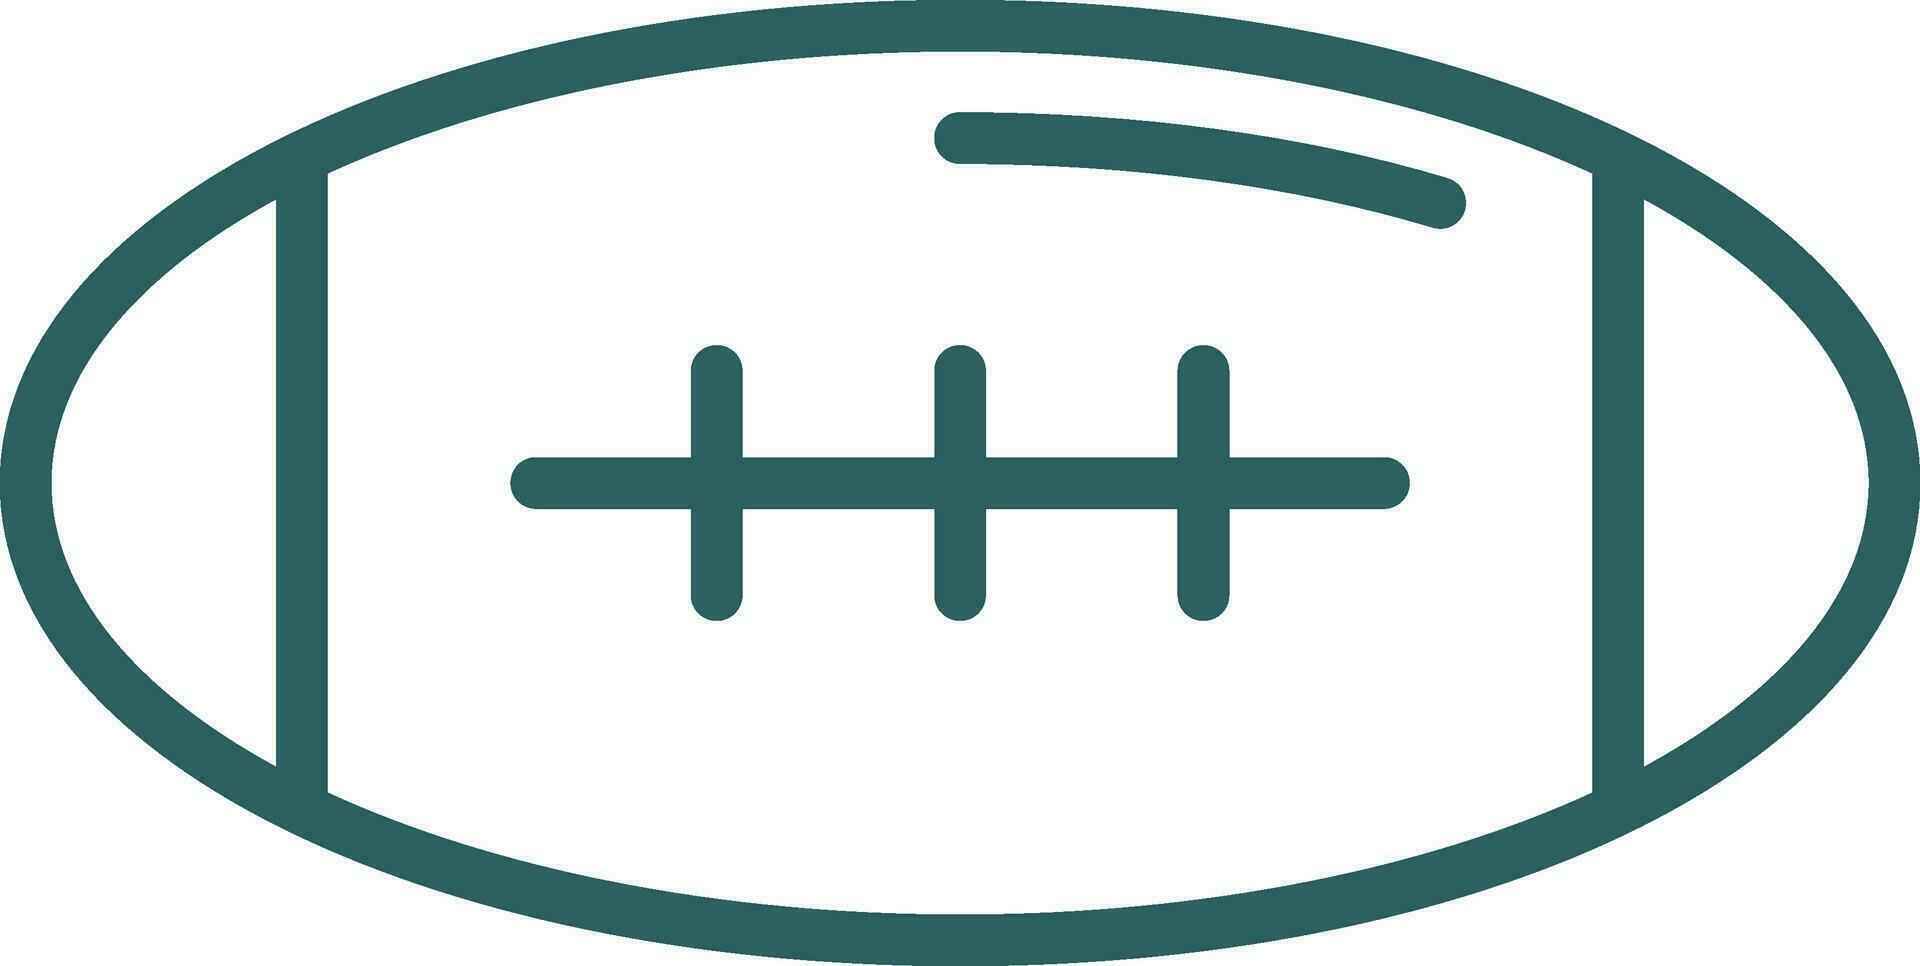 rugby vektor ikon design